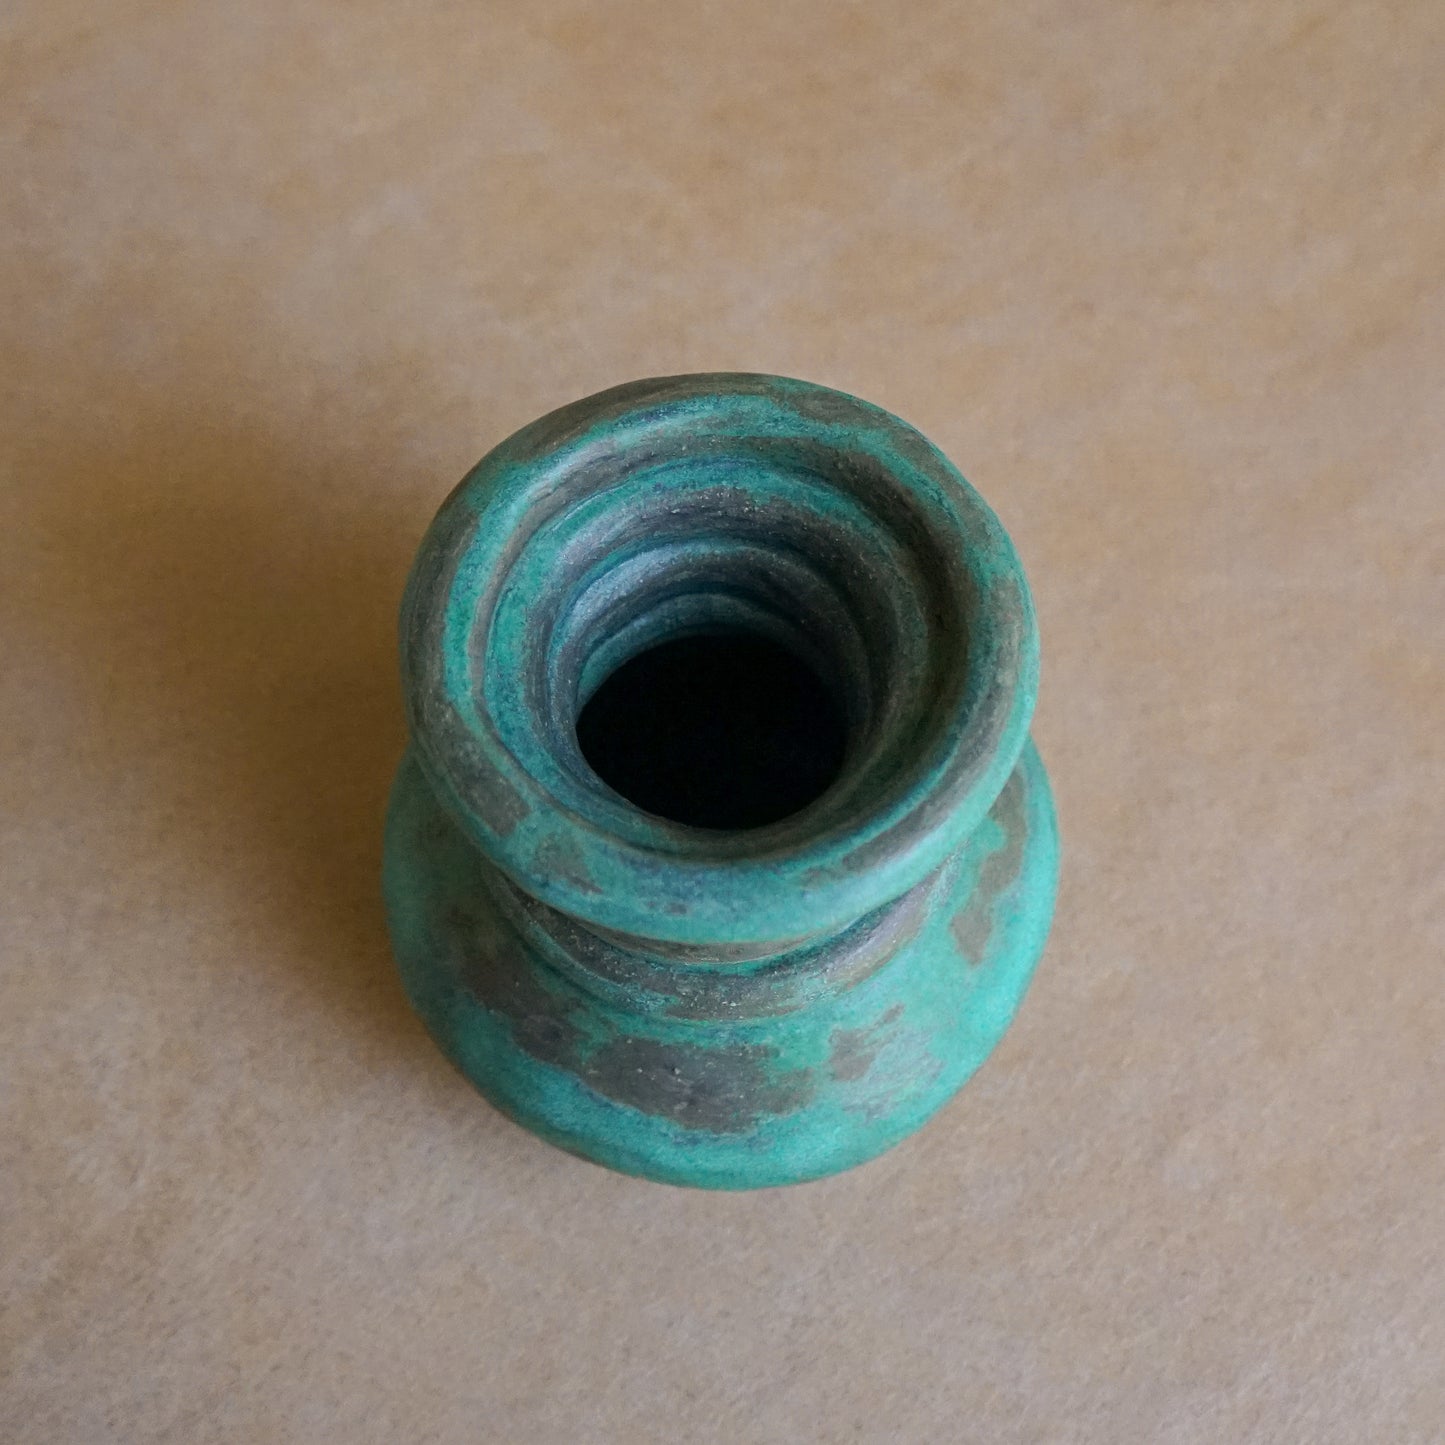 The Santa Fe + Teal Coil Vase